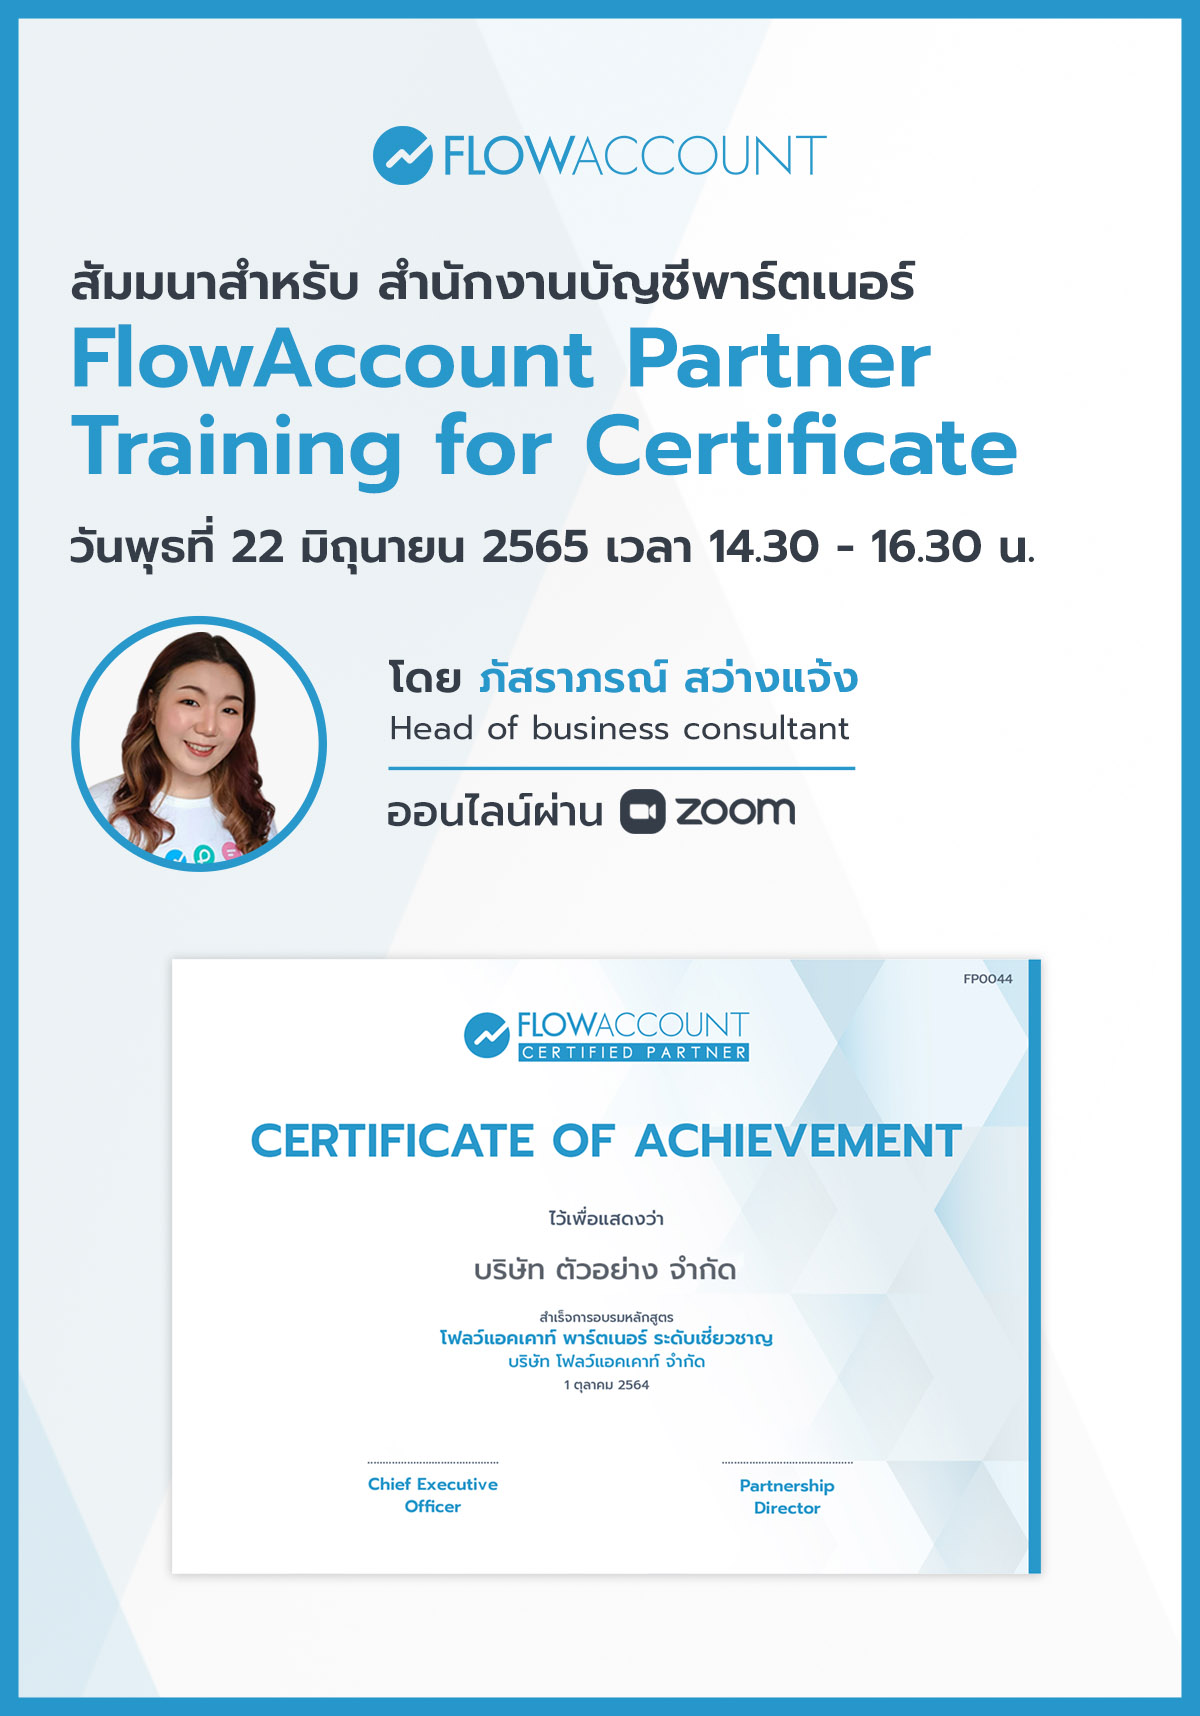 FlowAccount Partner Training for Certificate